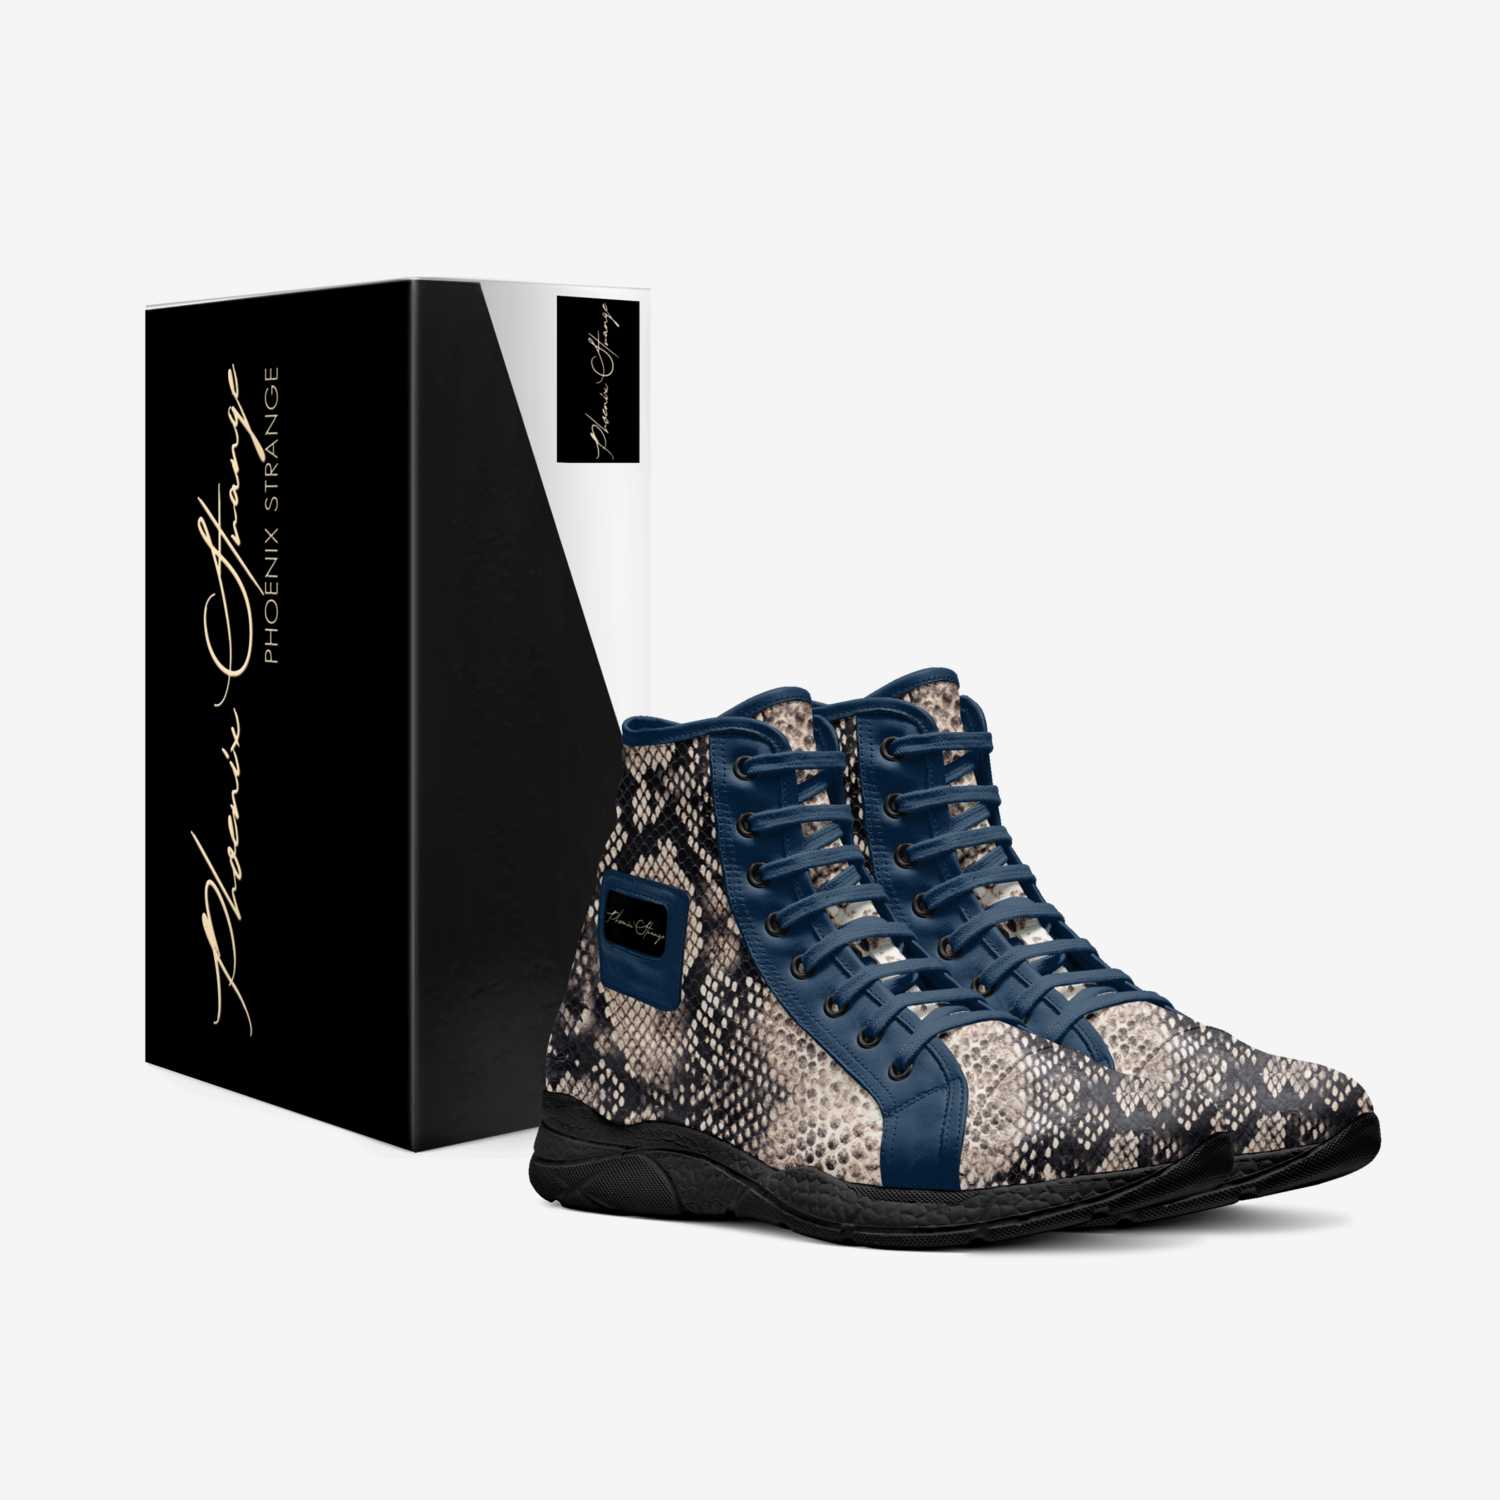 Diane Strawnjay custom made in Italy shoes by Phoenix Strange | Box view